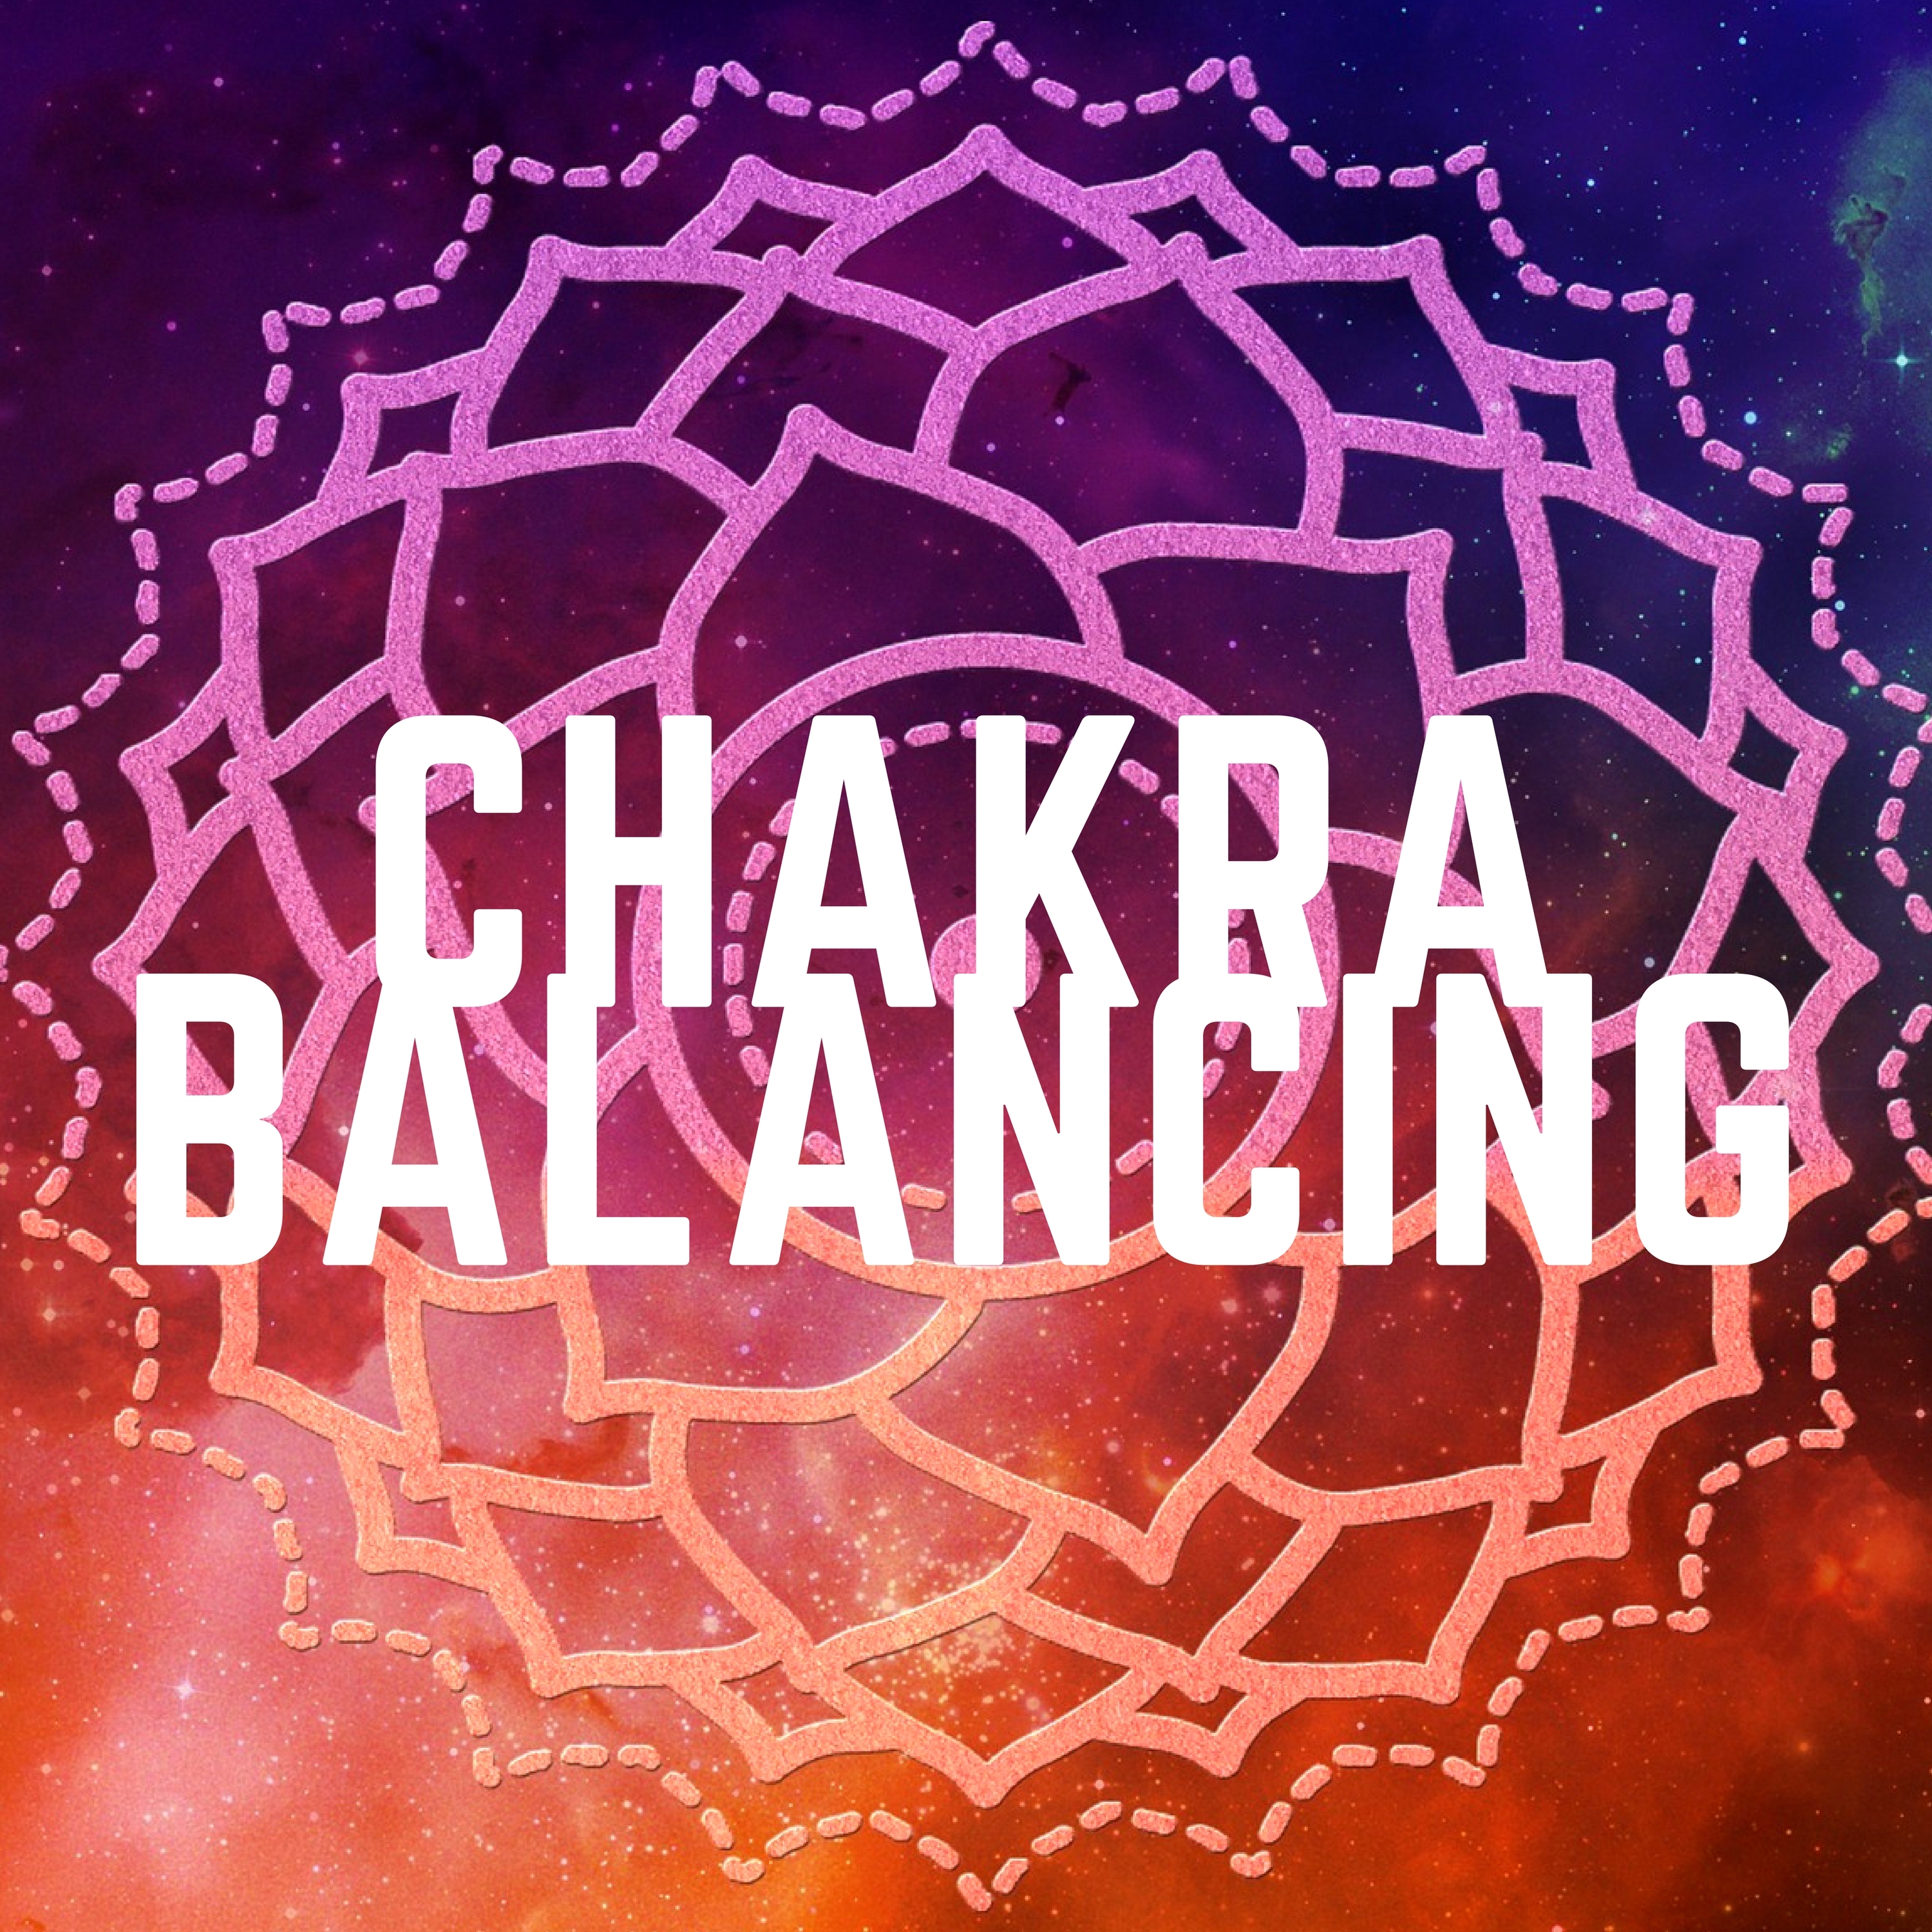 Chakra Balancing - the Source of Happiness